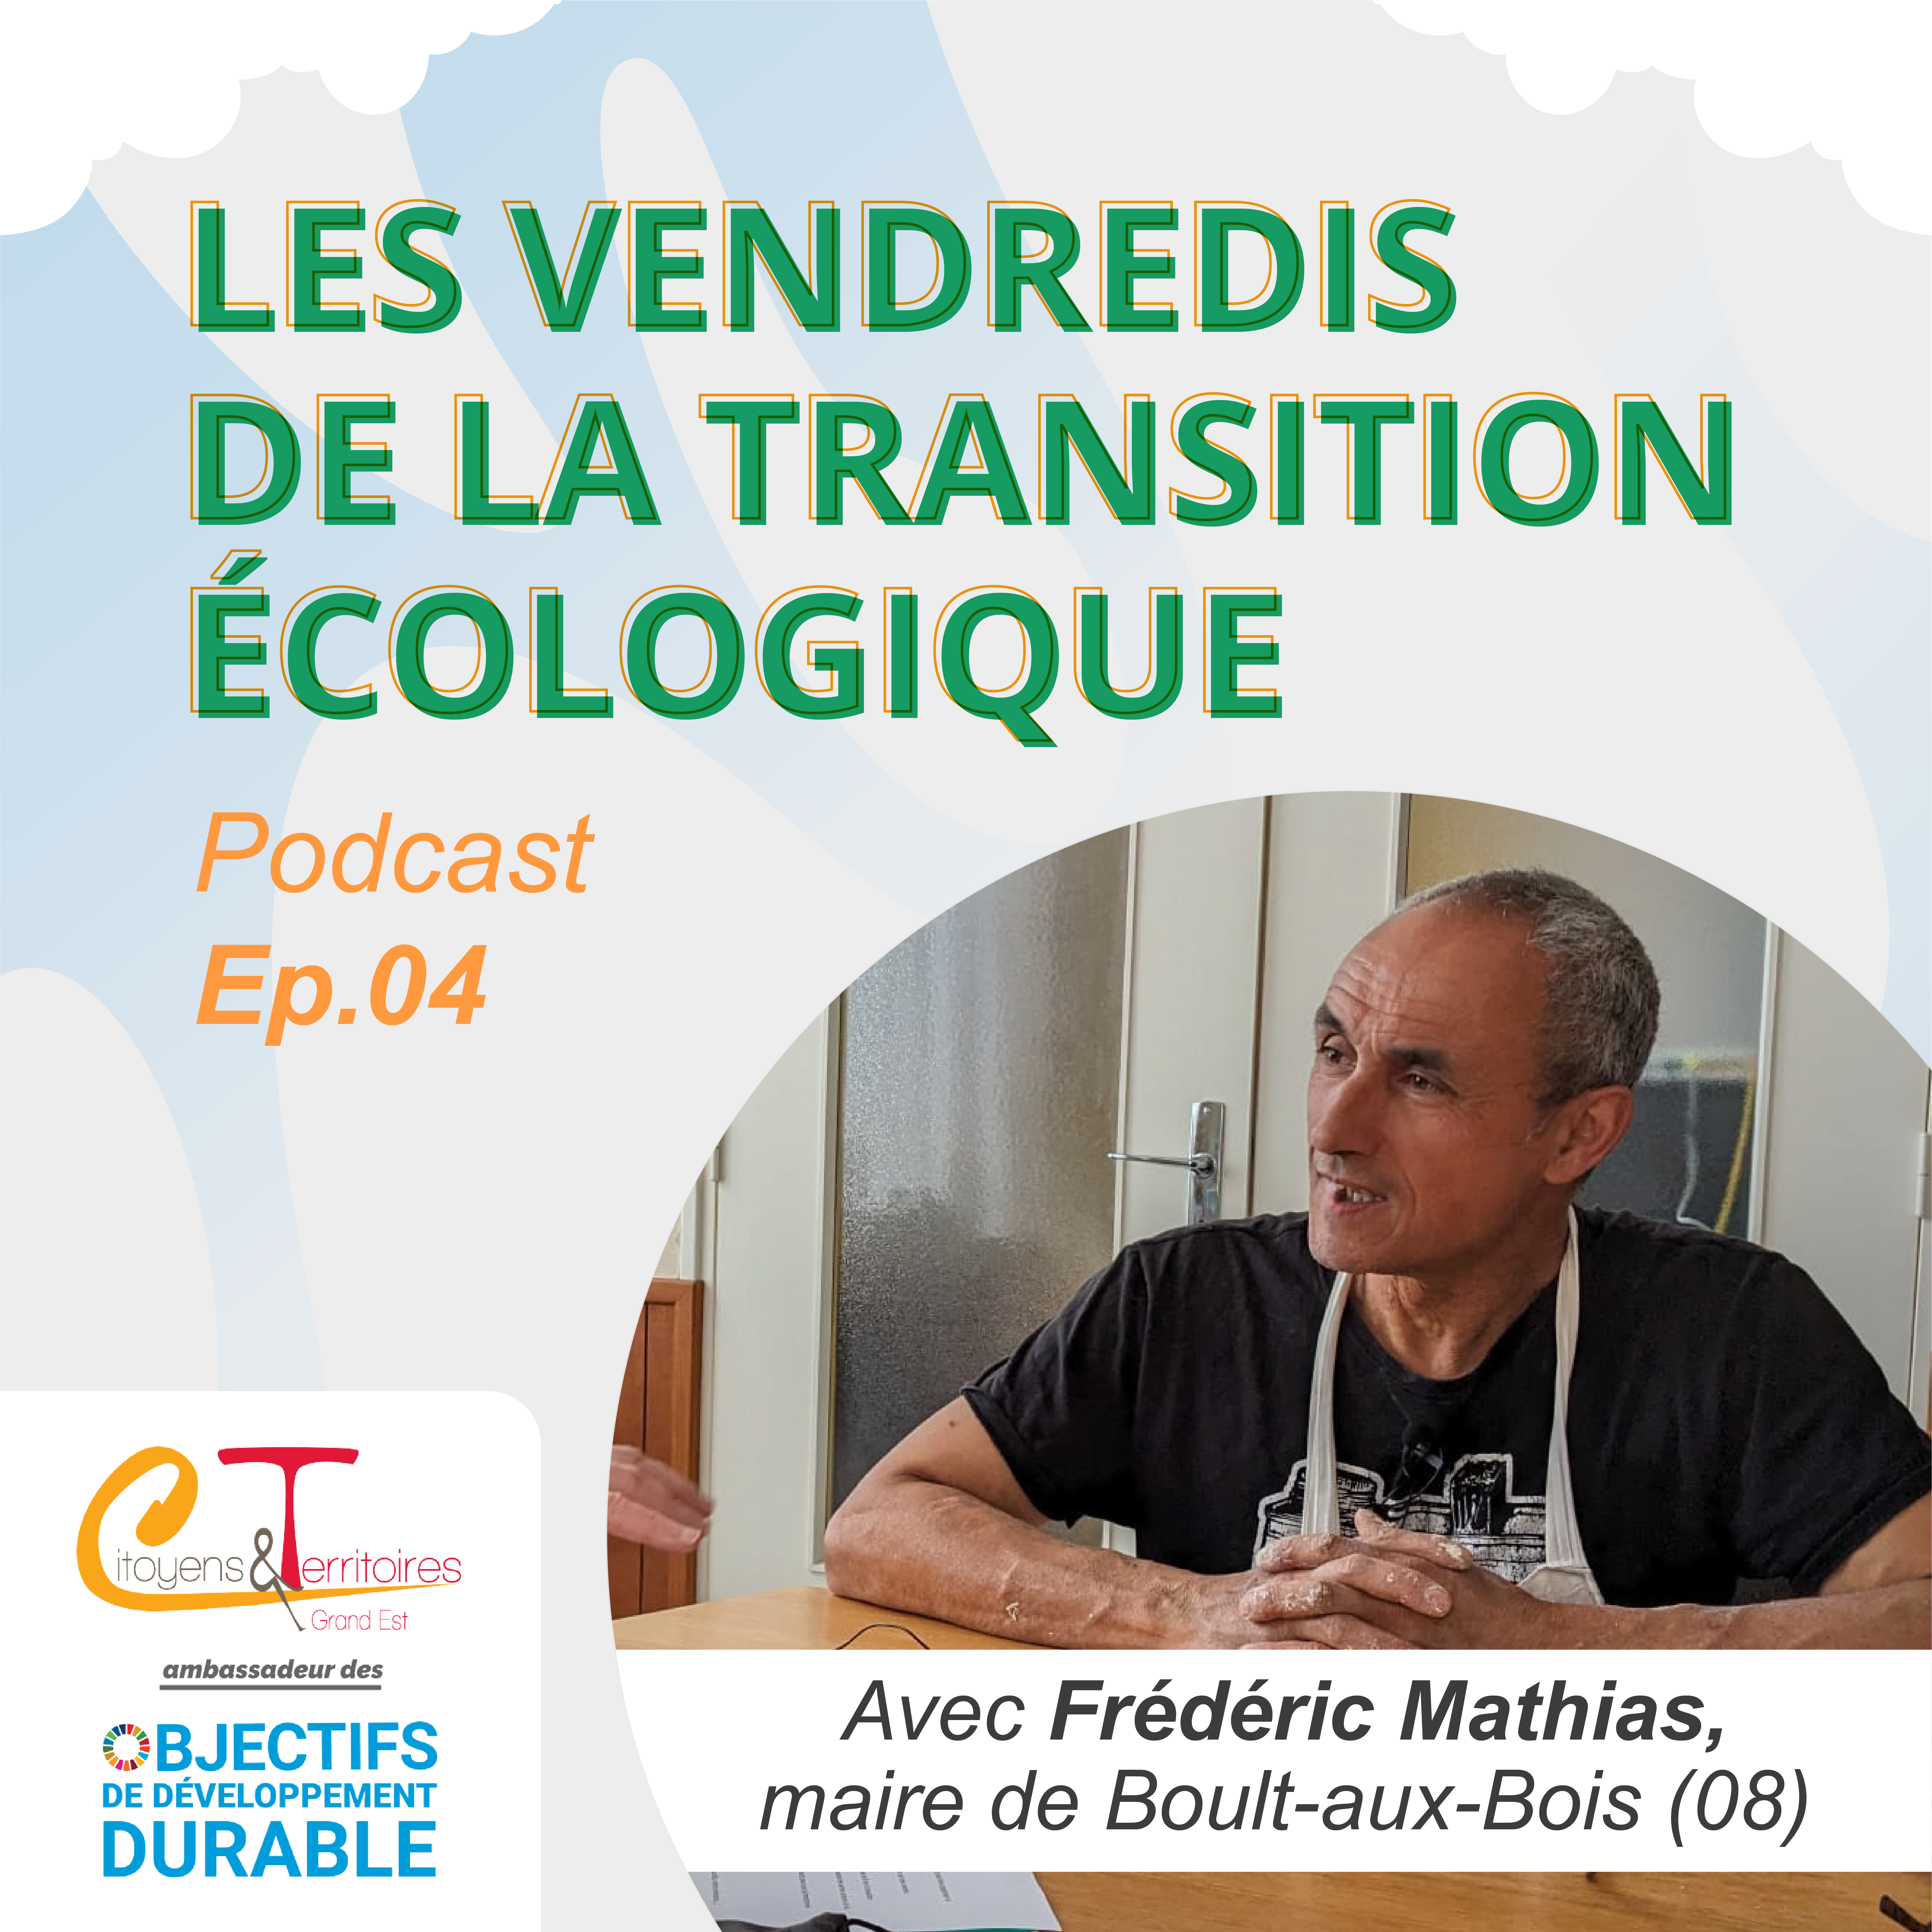 Podcast : Les Vendredis de la transition écologique – EP4 : Transition écologique, le collectif à l’œuvre !